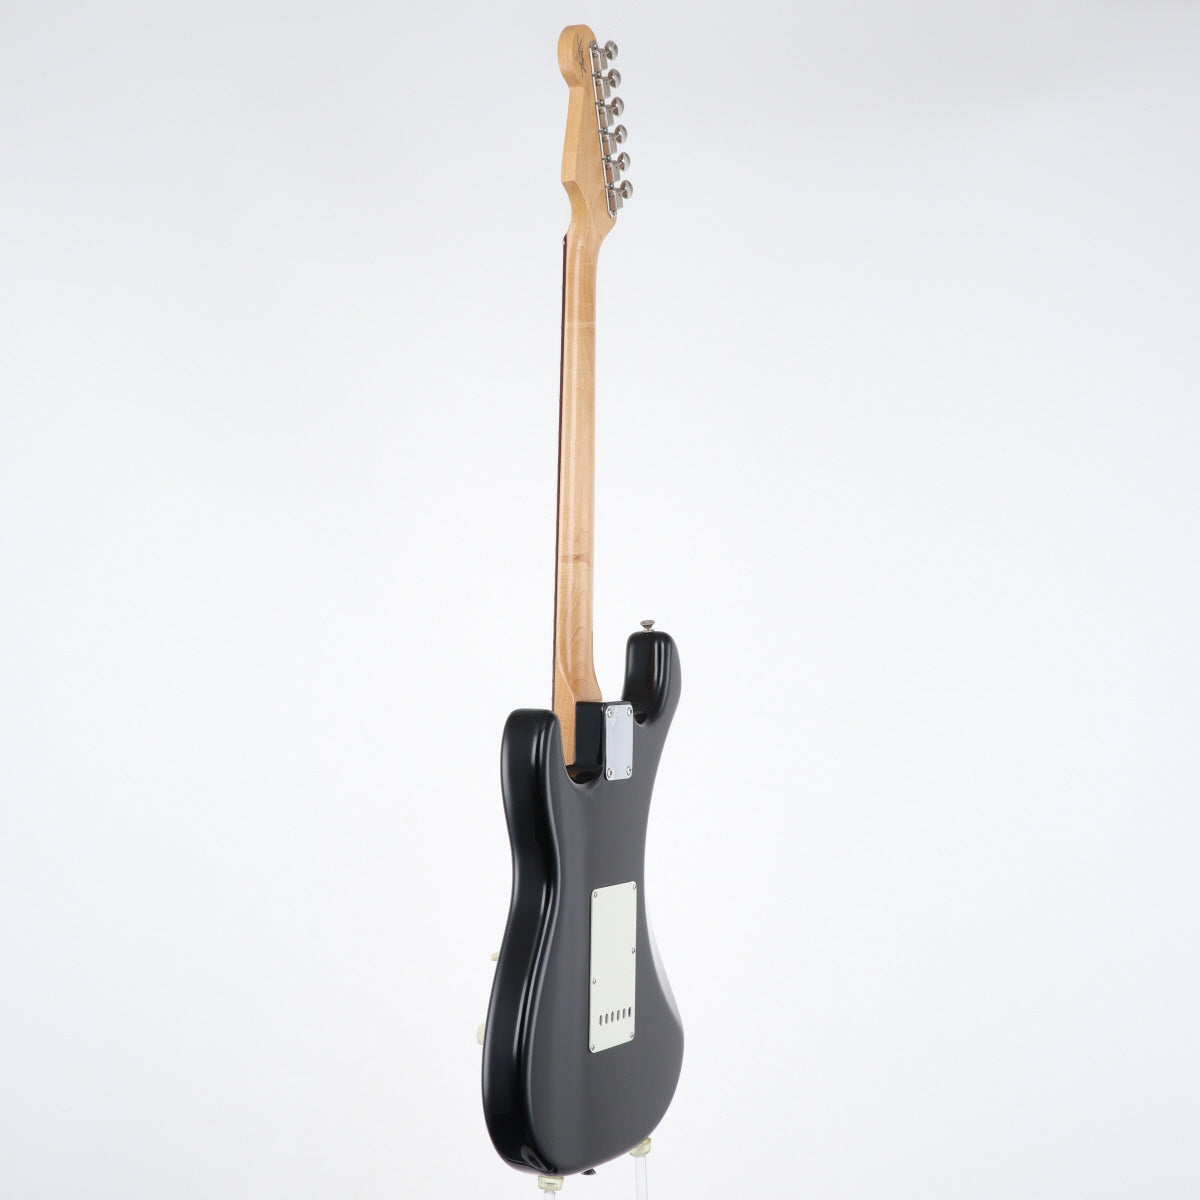 [SN R37700] USED Fender Custom Shop / 1960 Stratocaster Closet Classic Black [11]